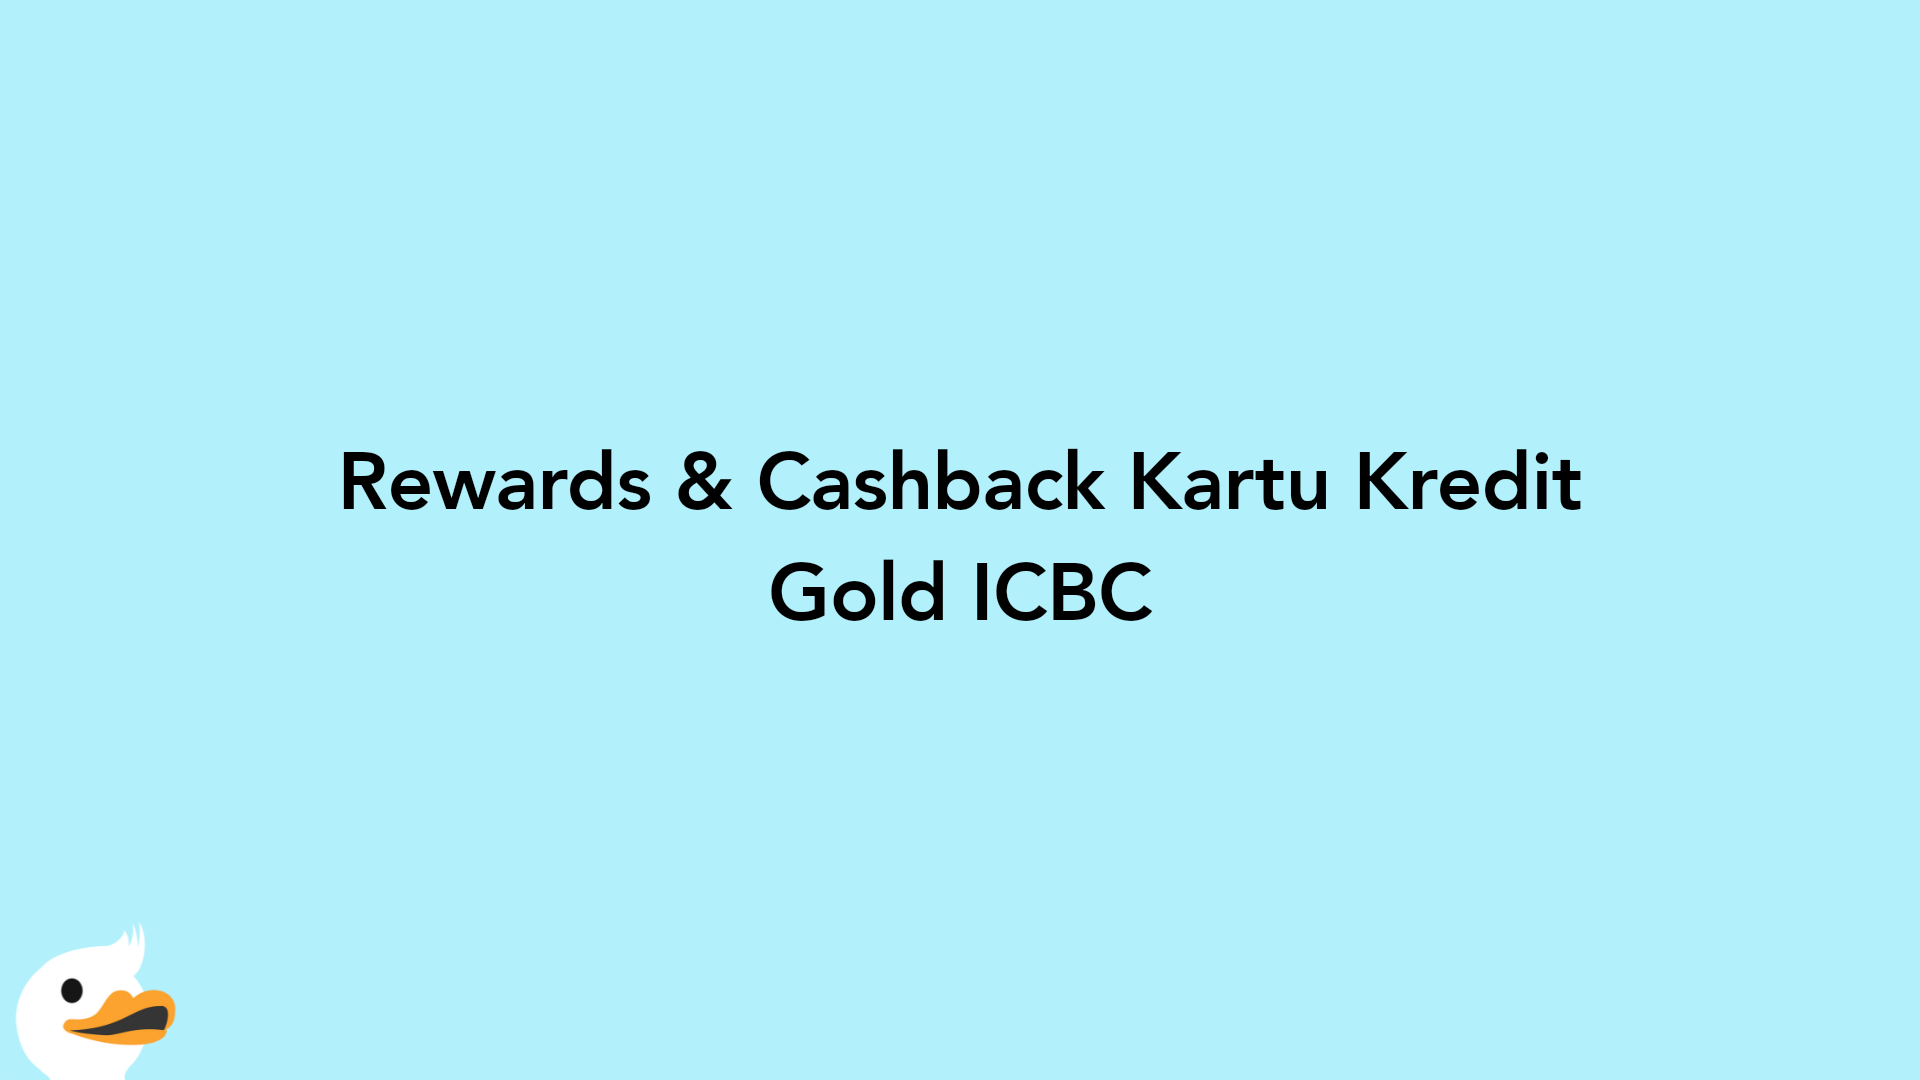 Rewards & Cashback Kartu Kredit Gold ICBC